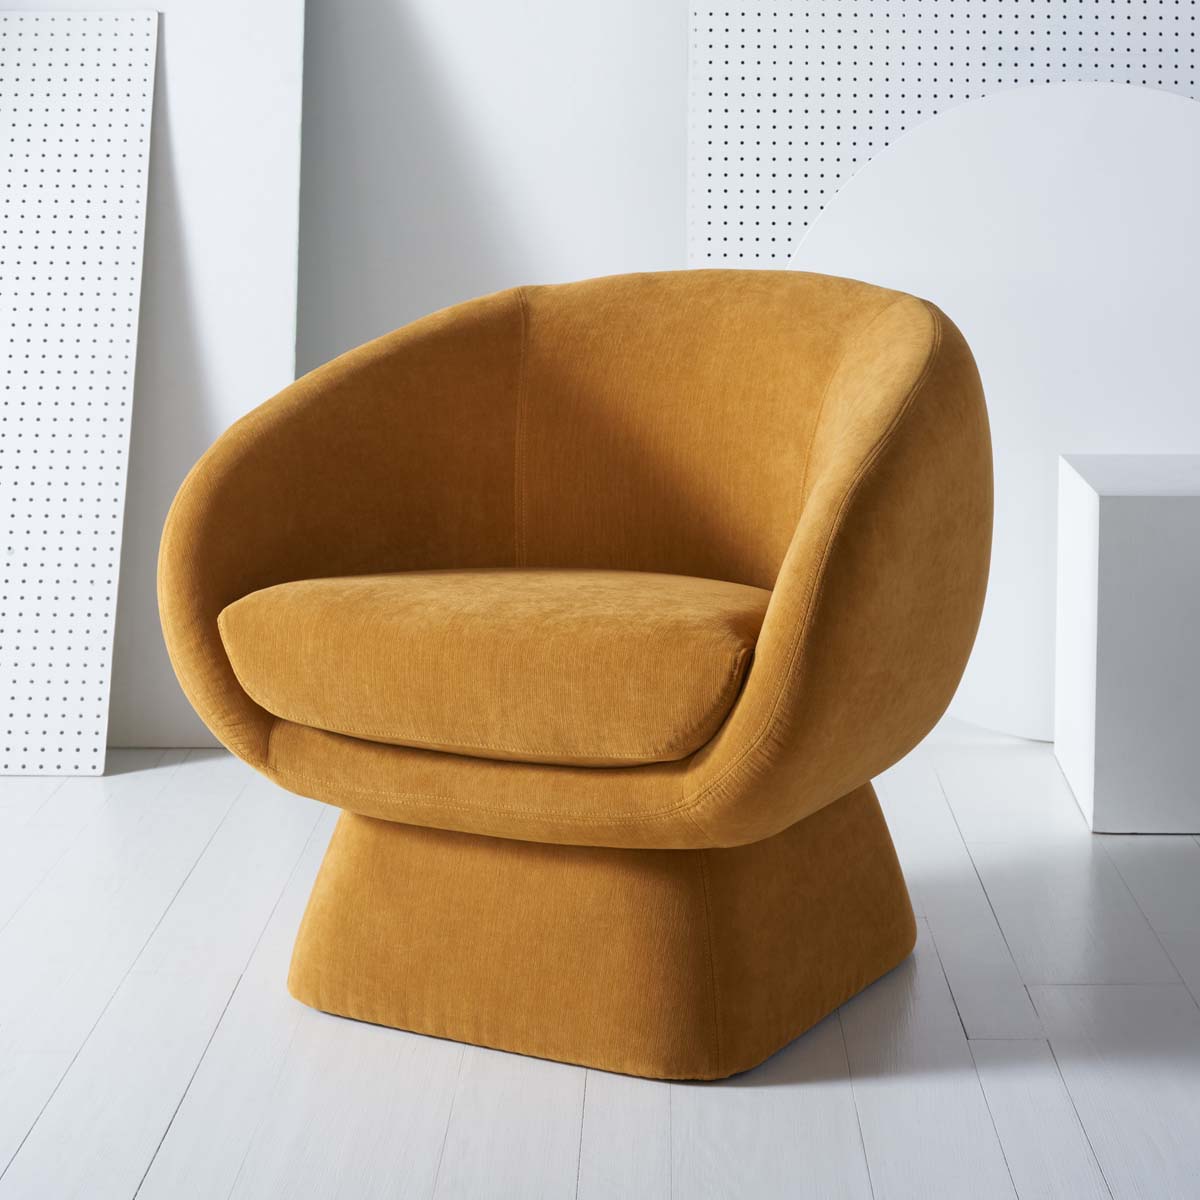 Safavieh Couture Kiana Modern Accent Chair - Mustard